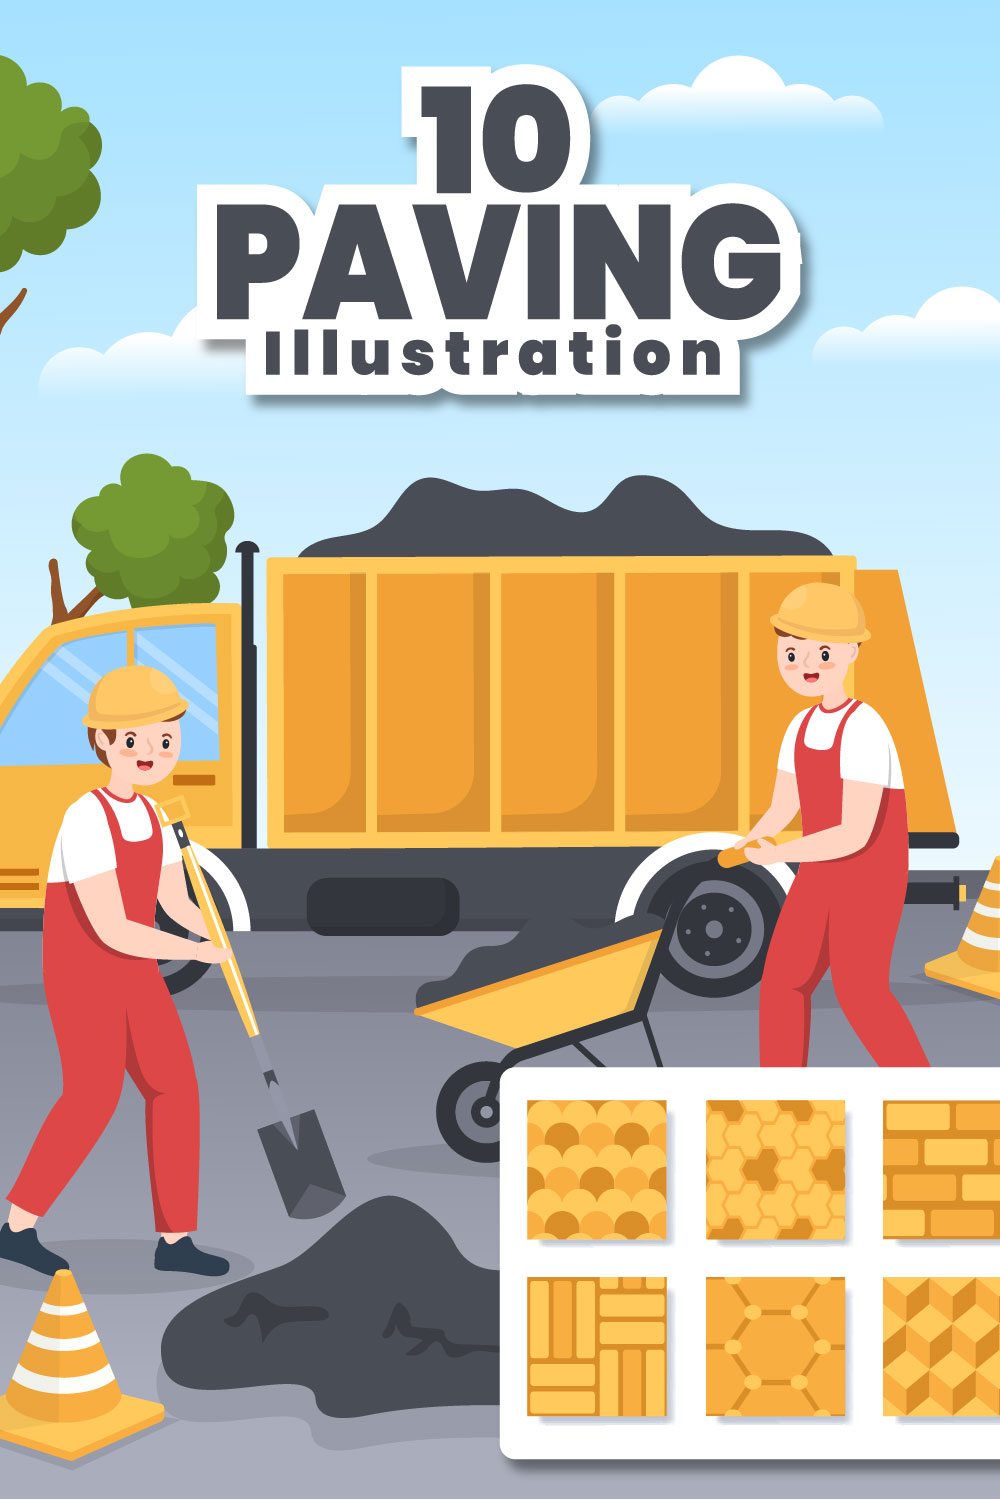 Road Construction or Paving Cartoon Illustration pinterest image.